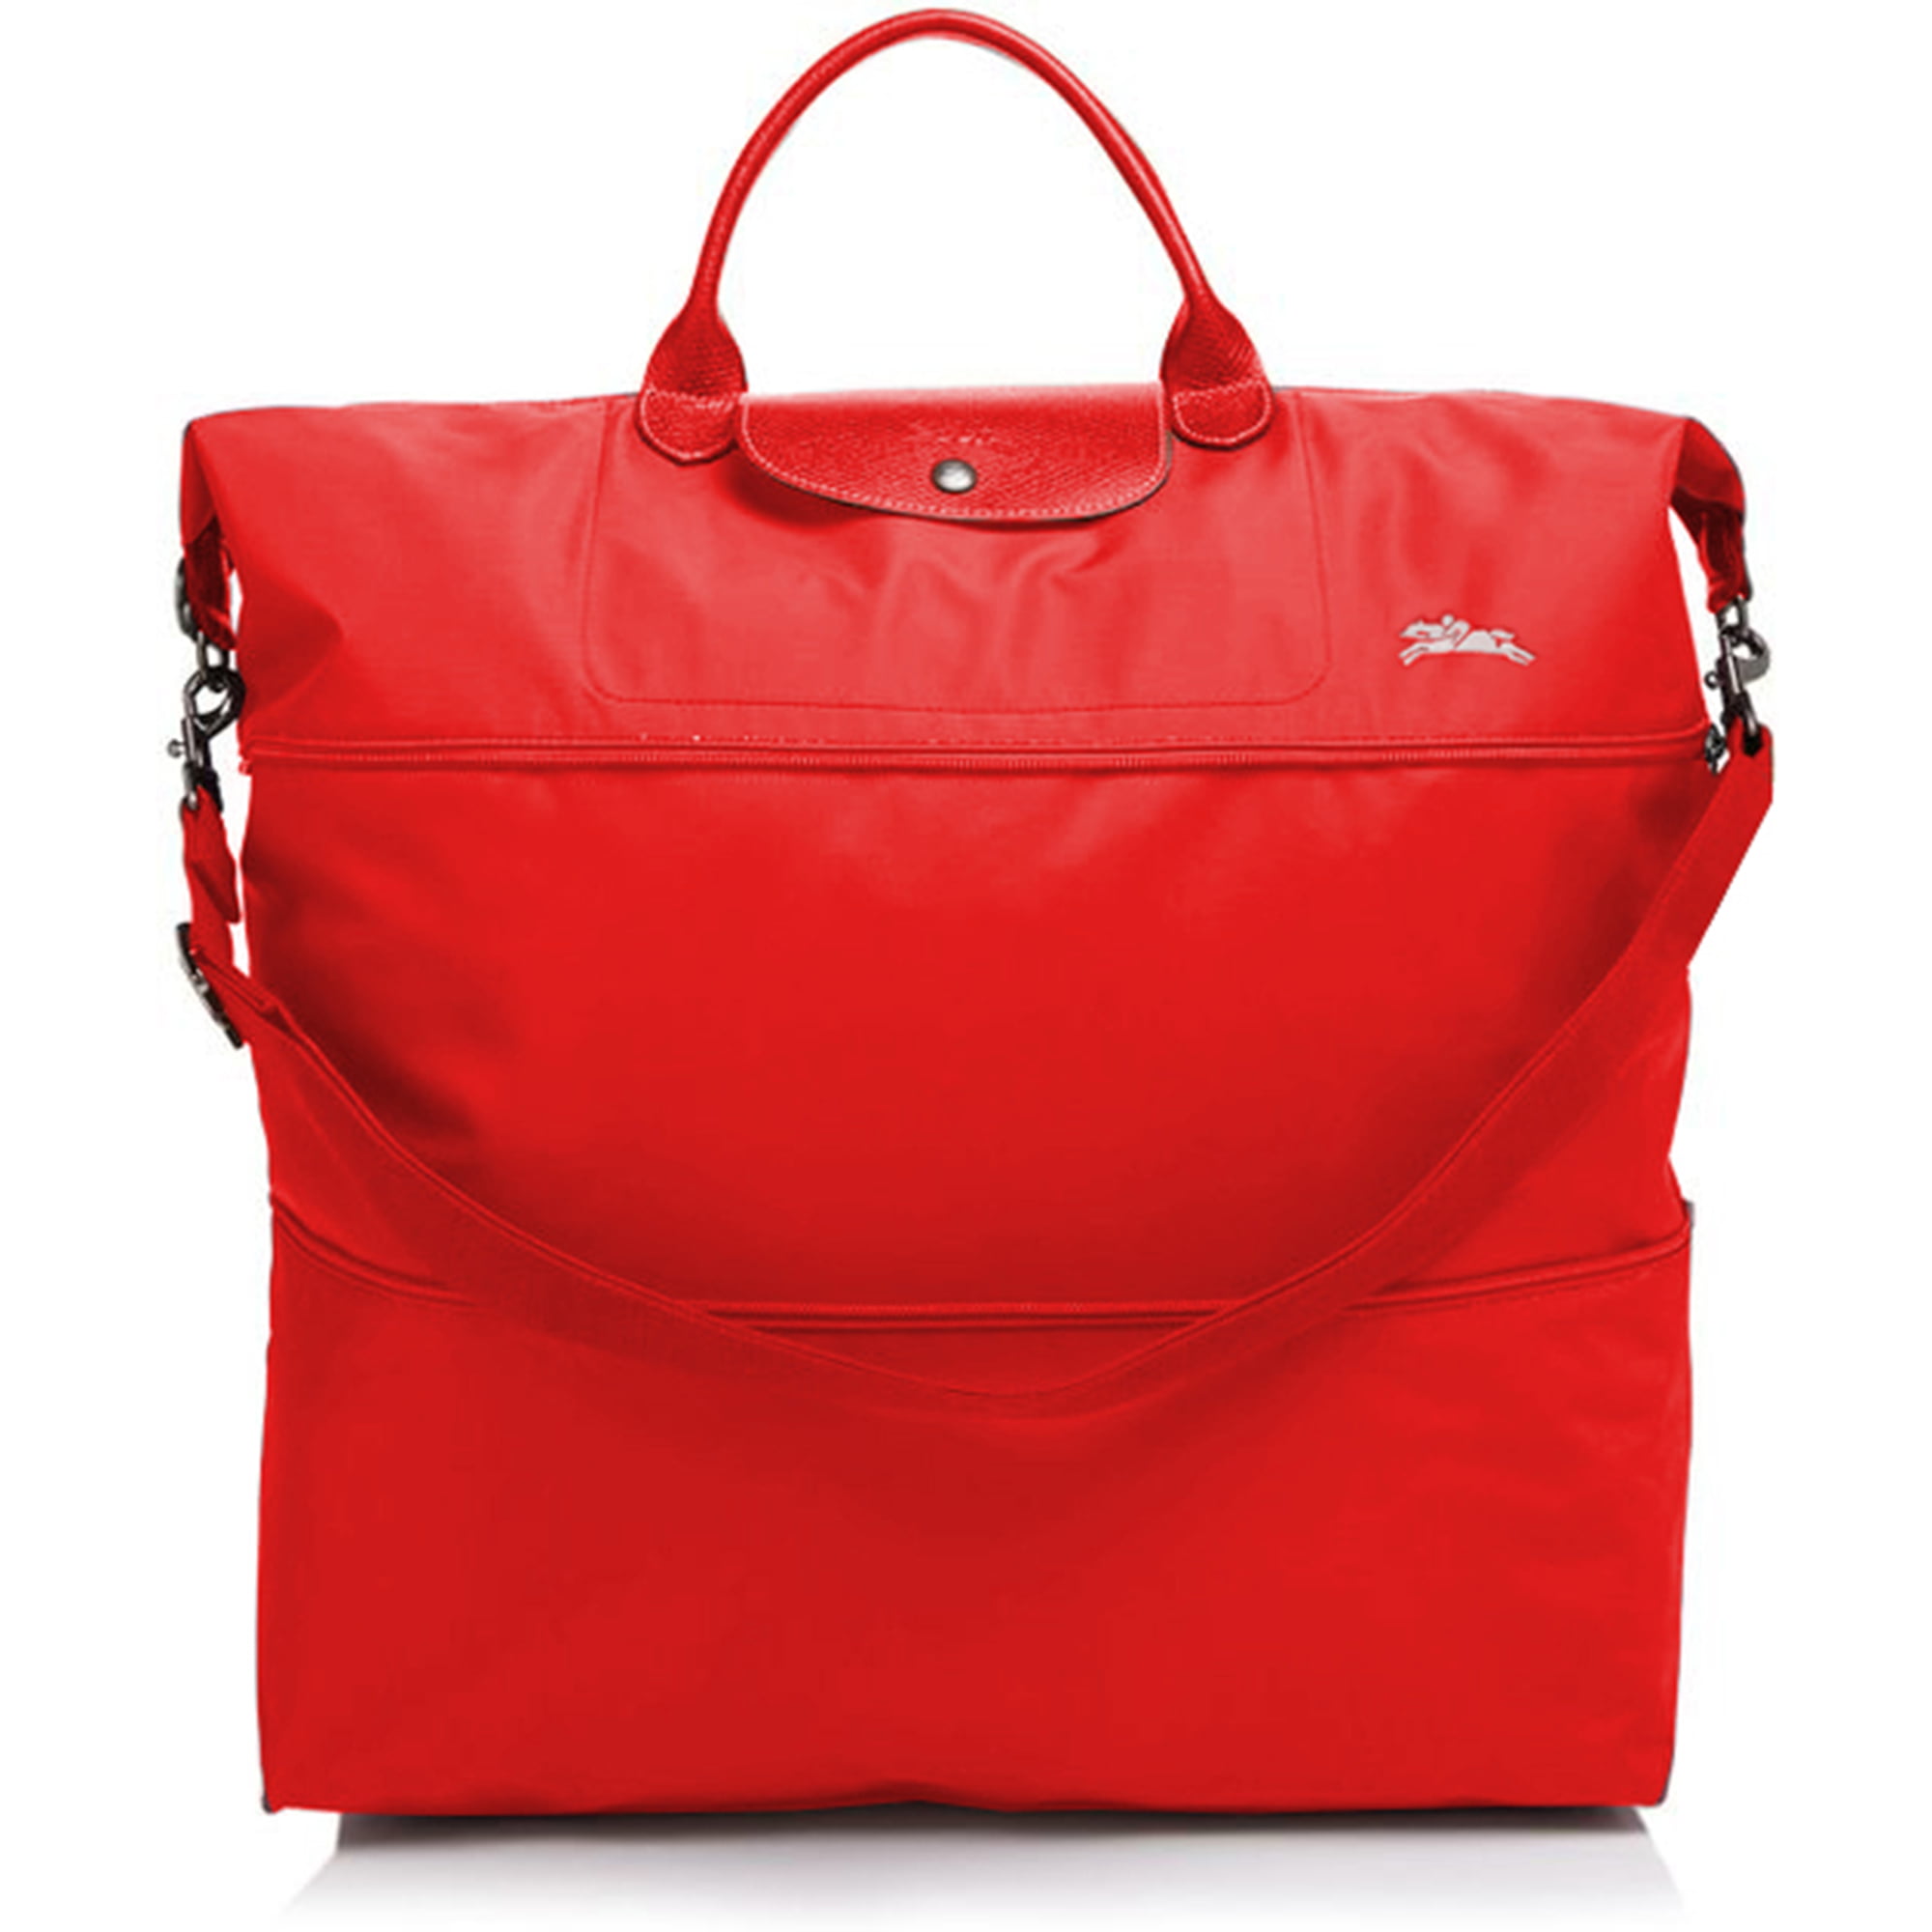 Longchamp expandable travel bag